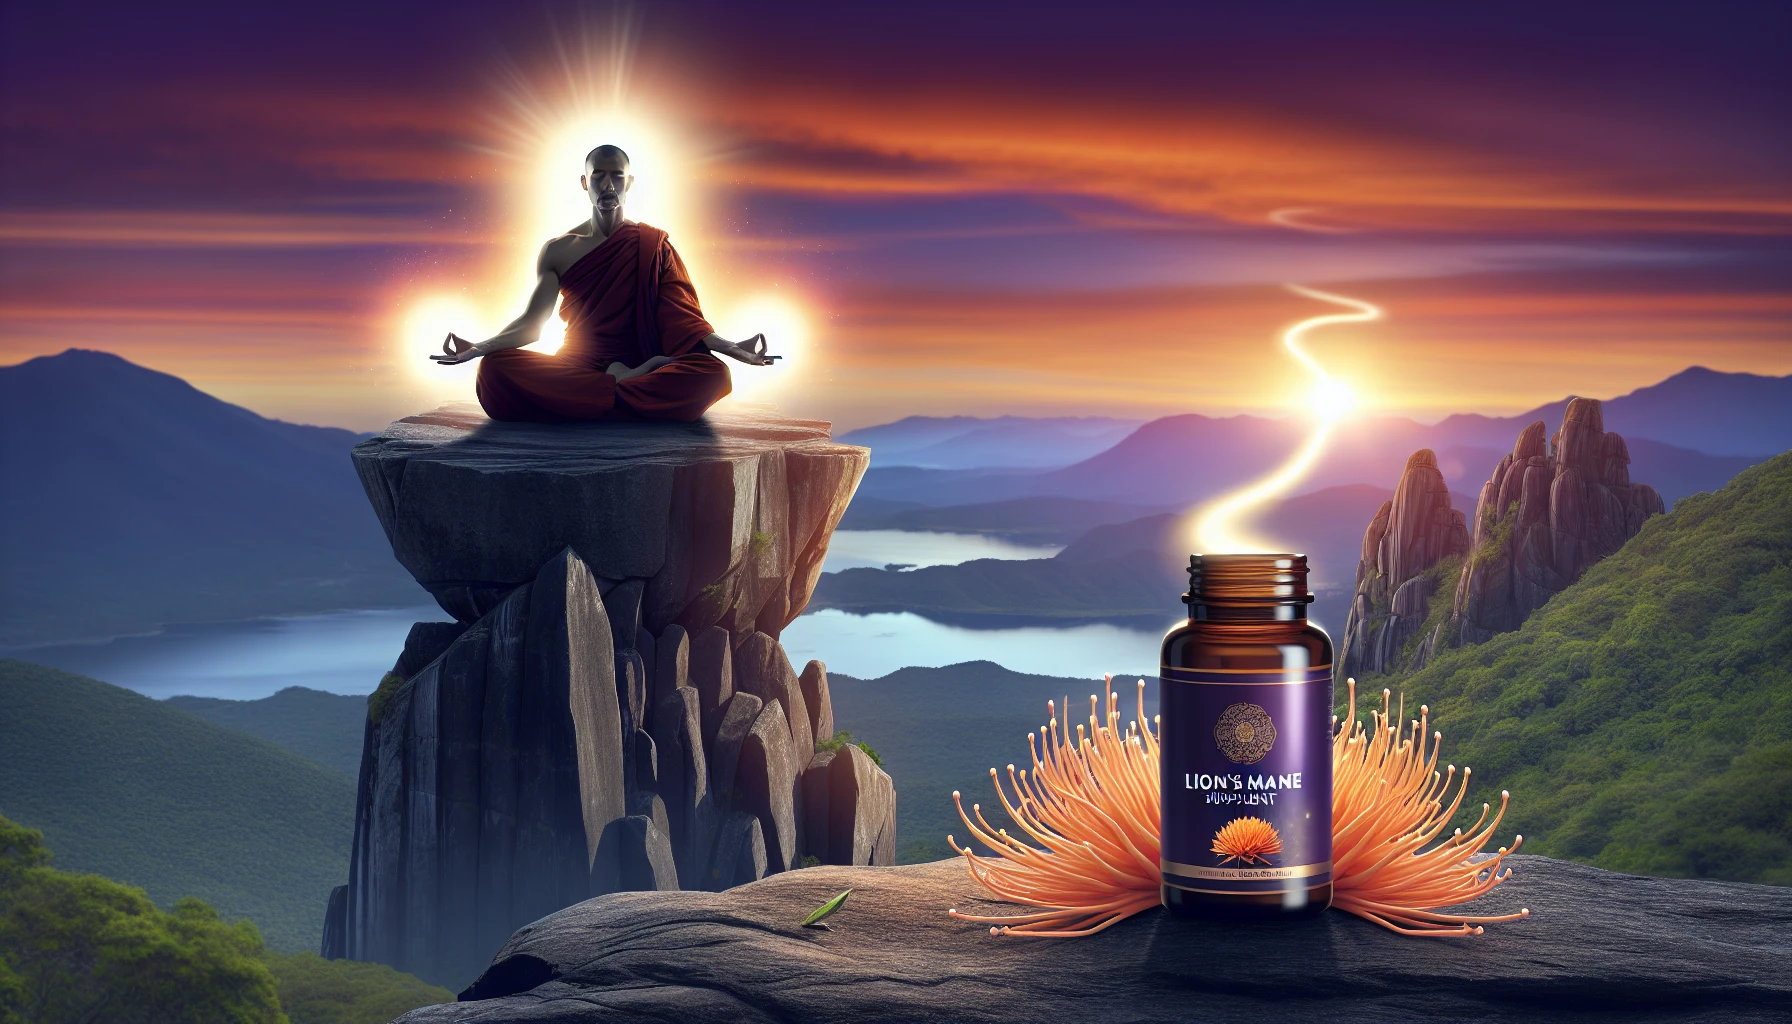 Illustration of Lion's Mane supplements for spiritual journey